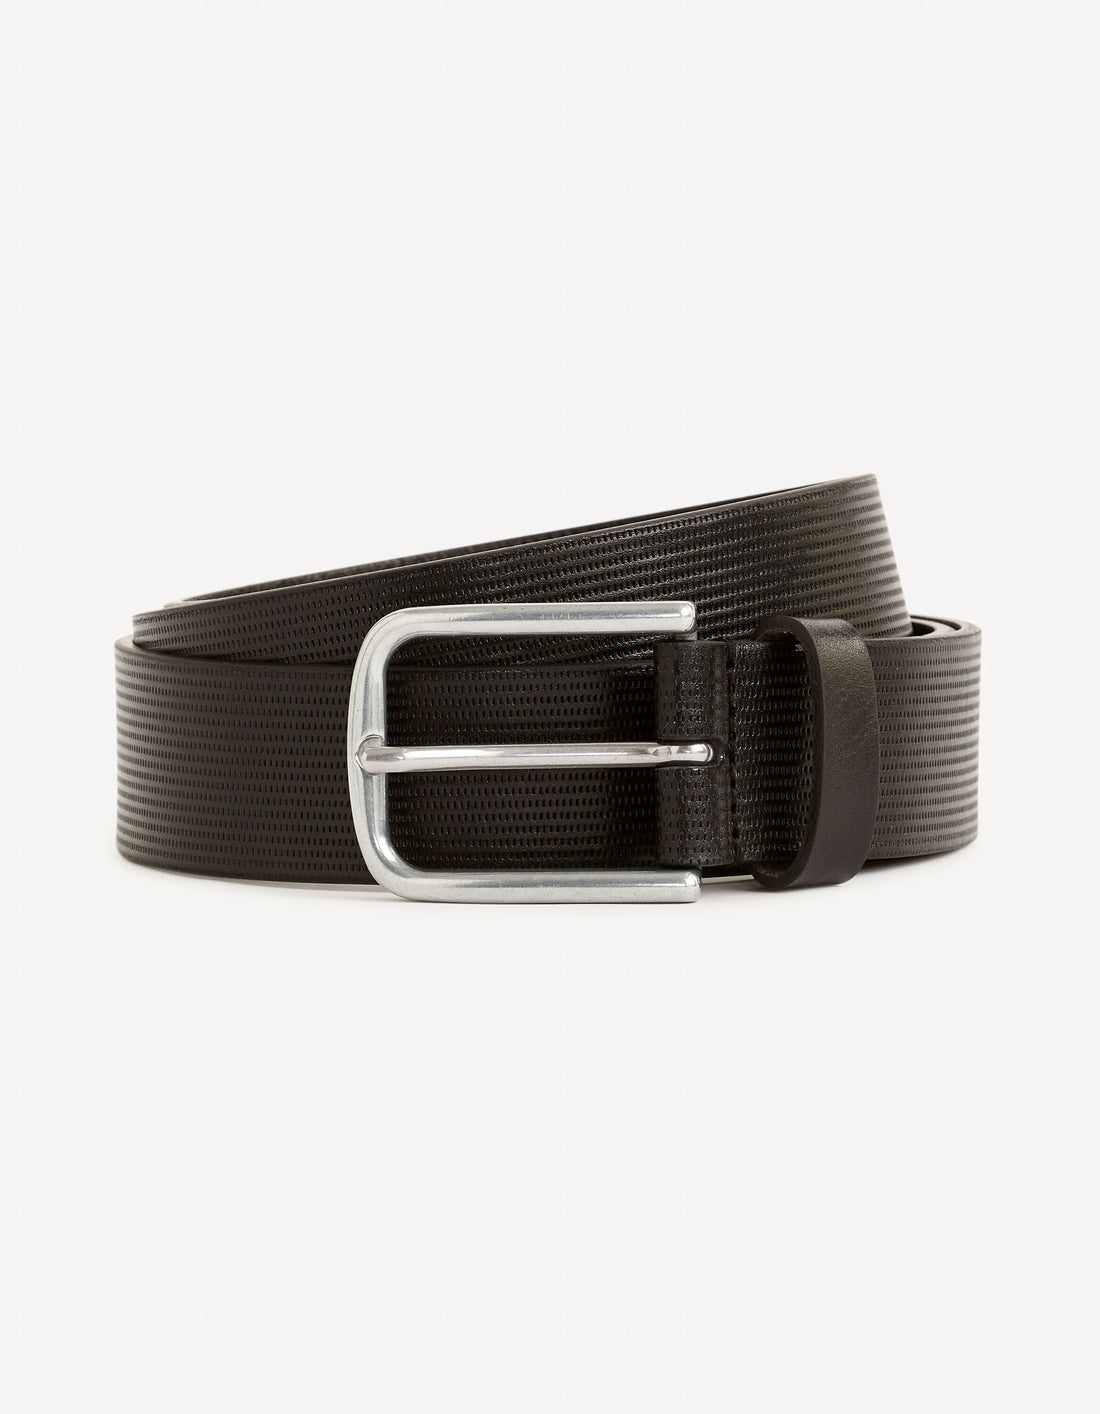 100% Leather Belt With Micro-Perforated Pattern - Black_DIBELTSPOR_NOIR_01